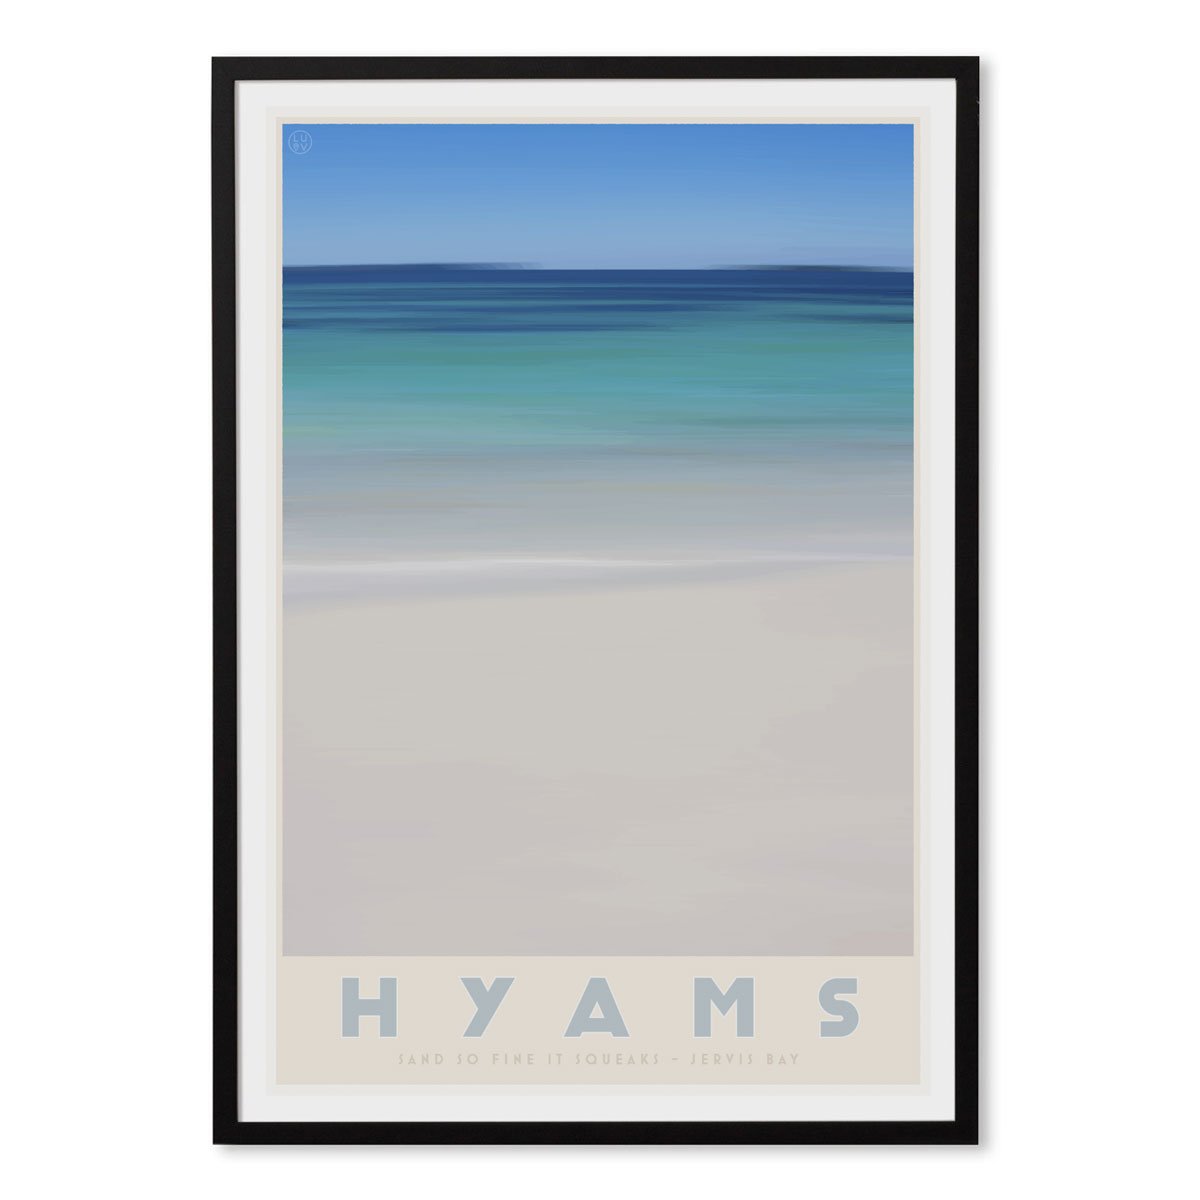 Hyams Beach black framed print. Vintage travel style. original design by places we luv